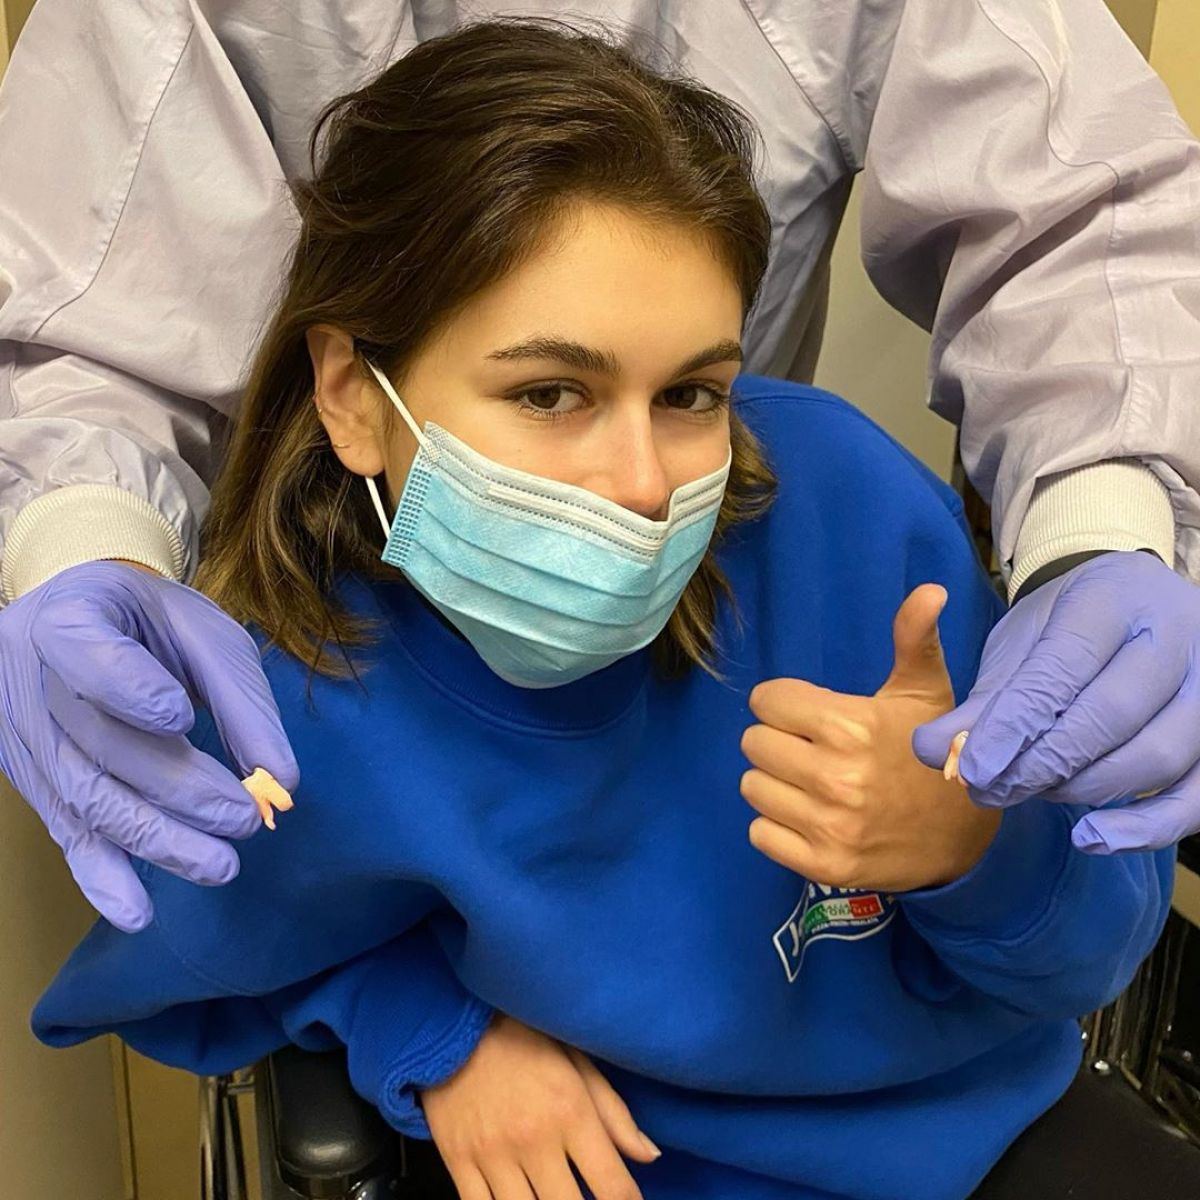 Kaia Gerber Gets Her Wisdom Teeth Removed - Instagram Photos 2020/10/24 1